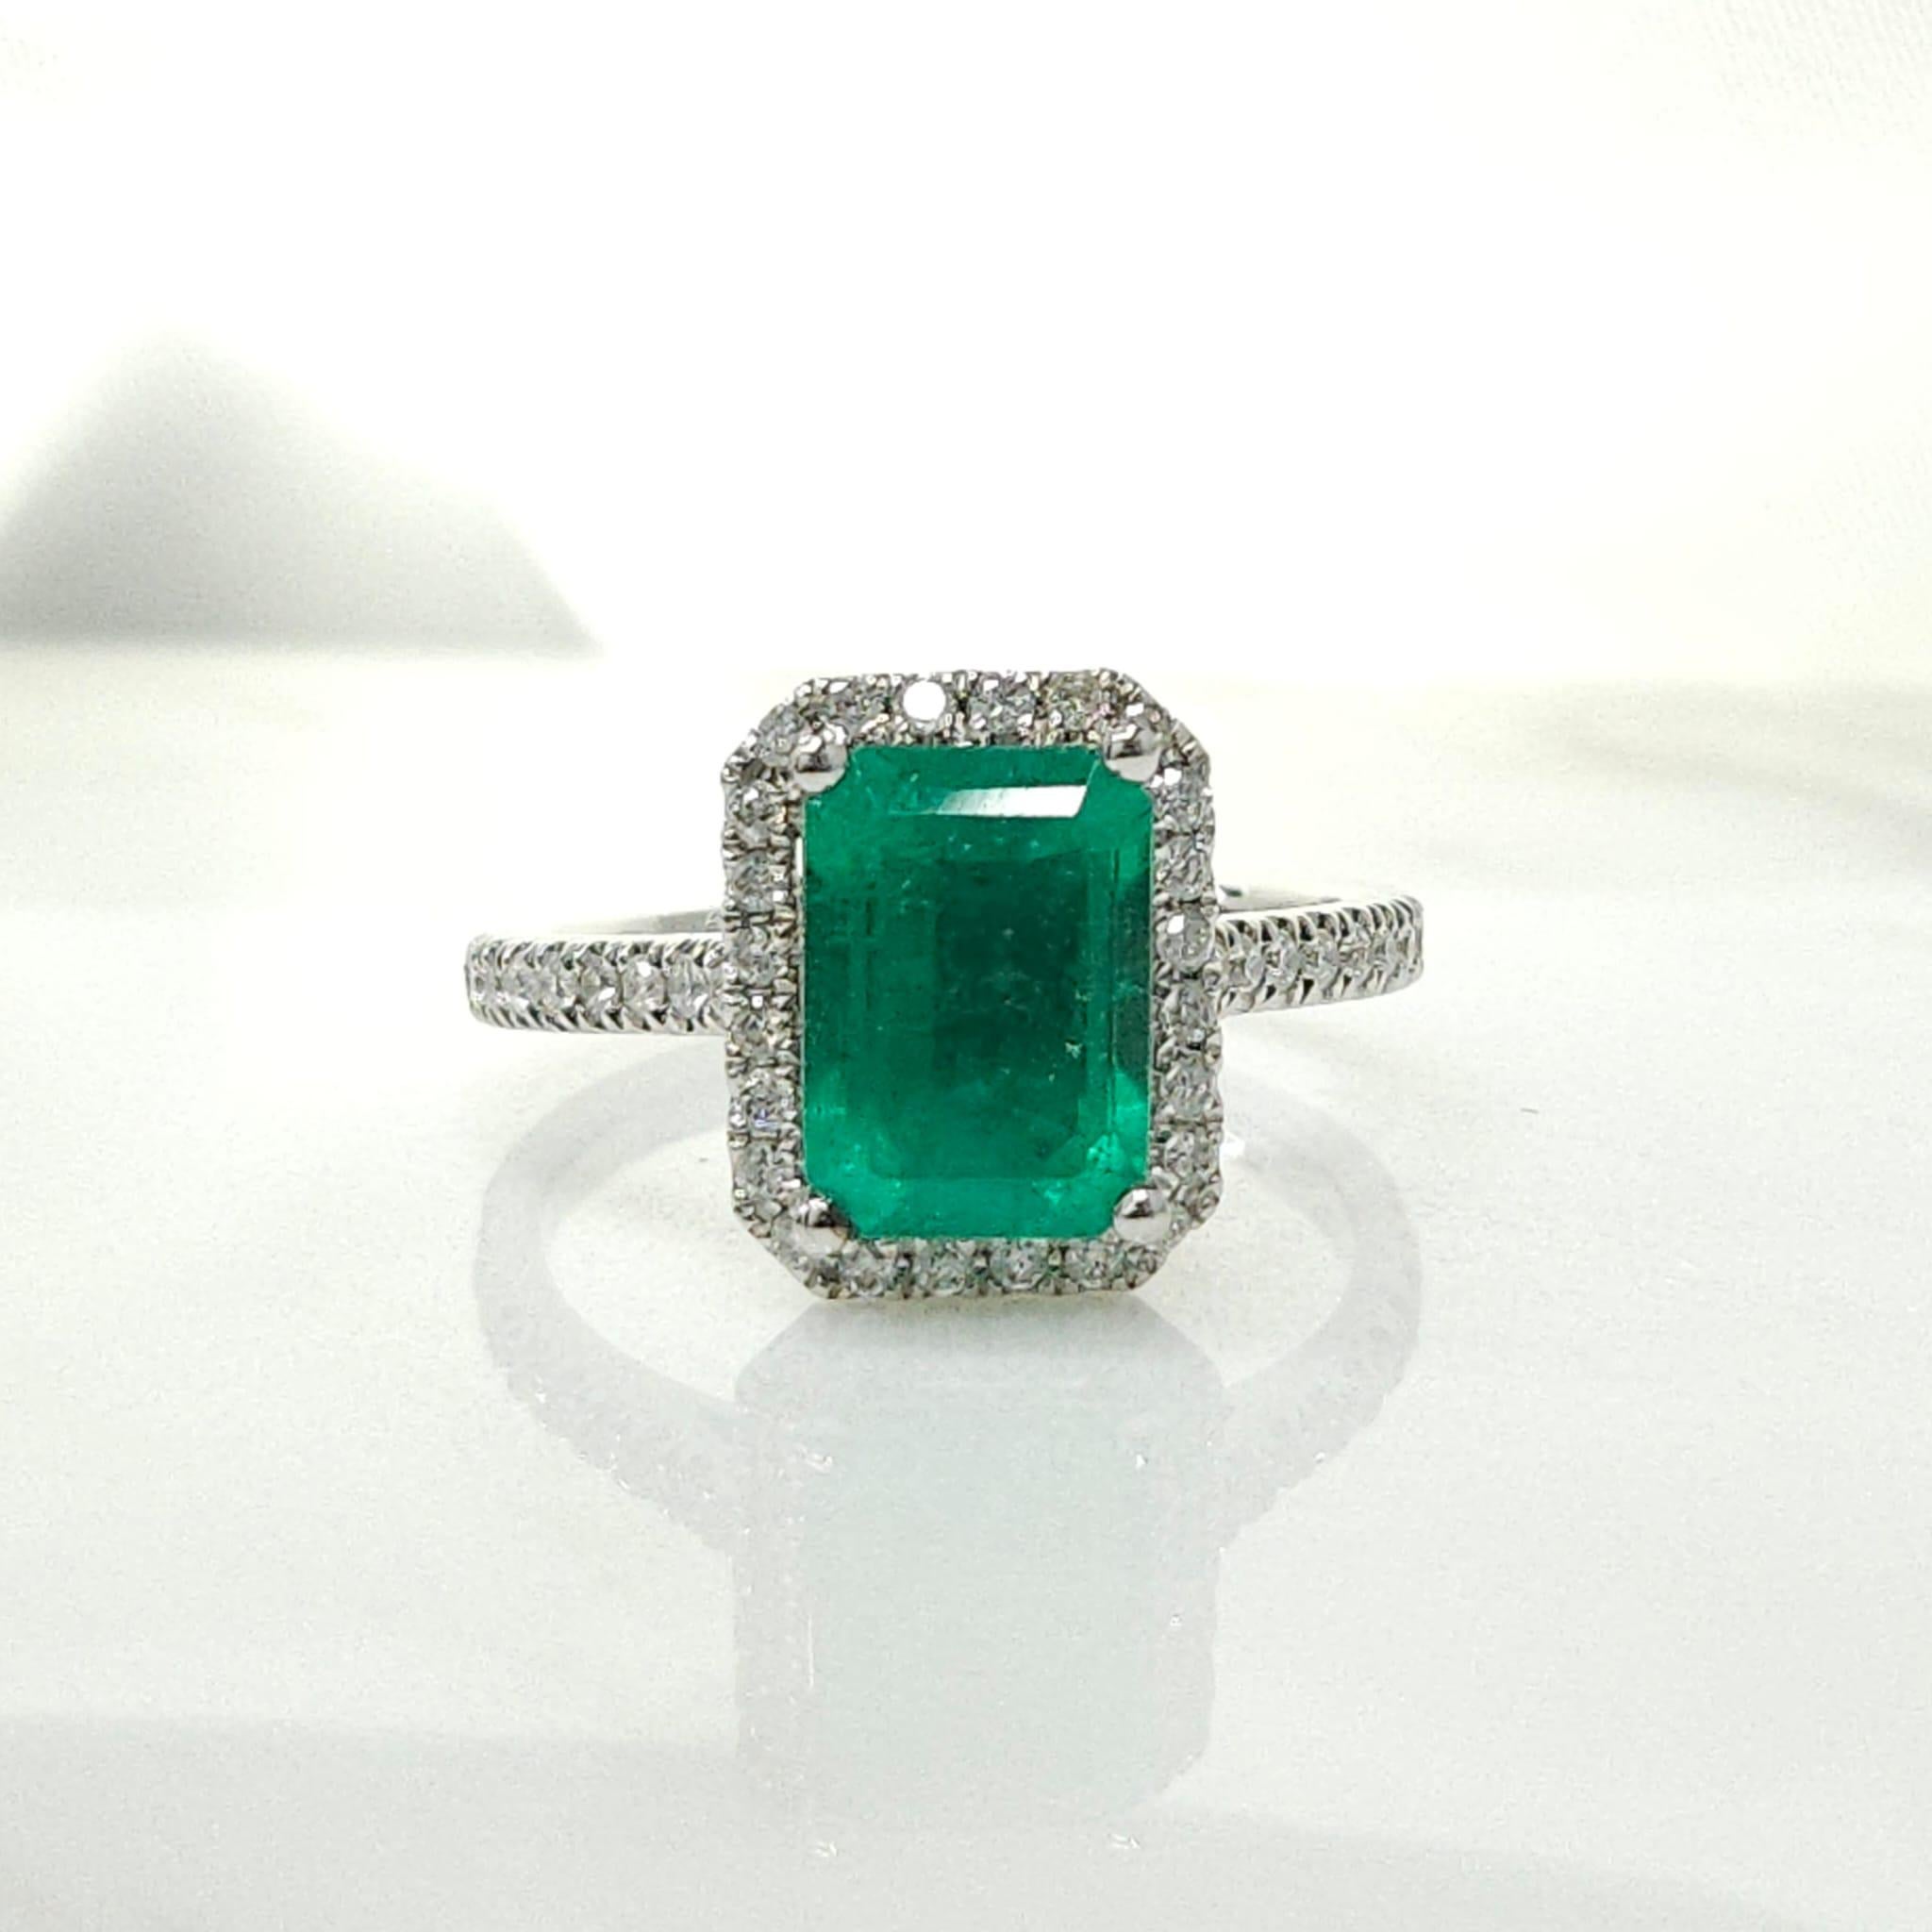 IGI Certified 1.76 Carat Emerald & Diamond Ring in 18K White Gold For Sale 5